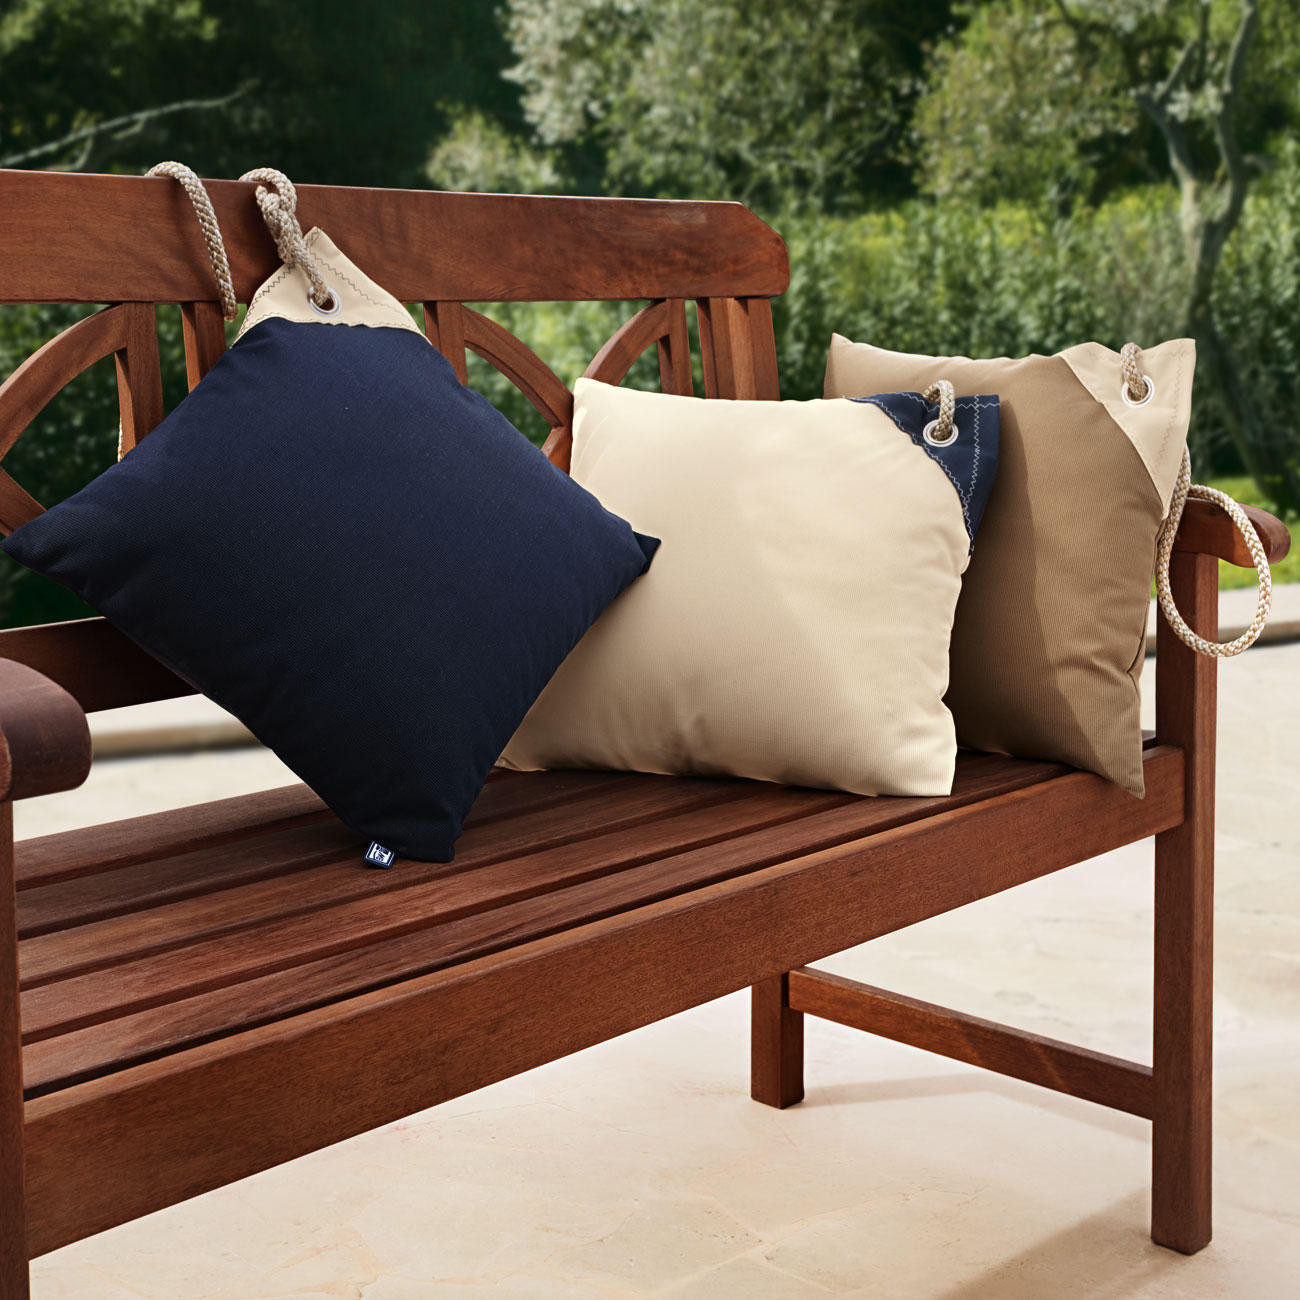 Best ideas about Outdoor Patio Furniture Cushions
. Save or Pin Patio Furniture Cushions Waterproof Type pixelmari Now.